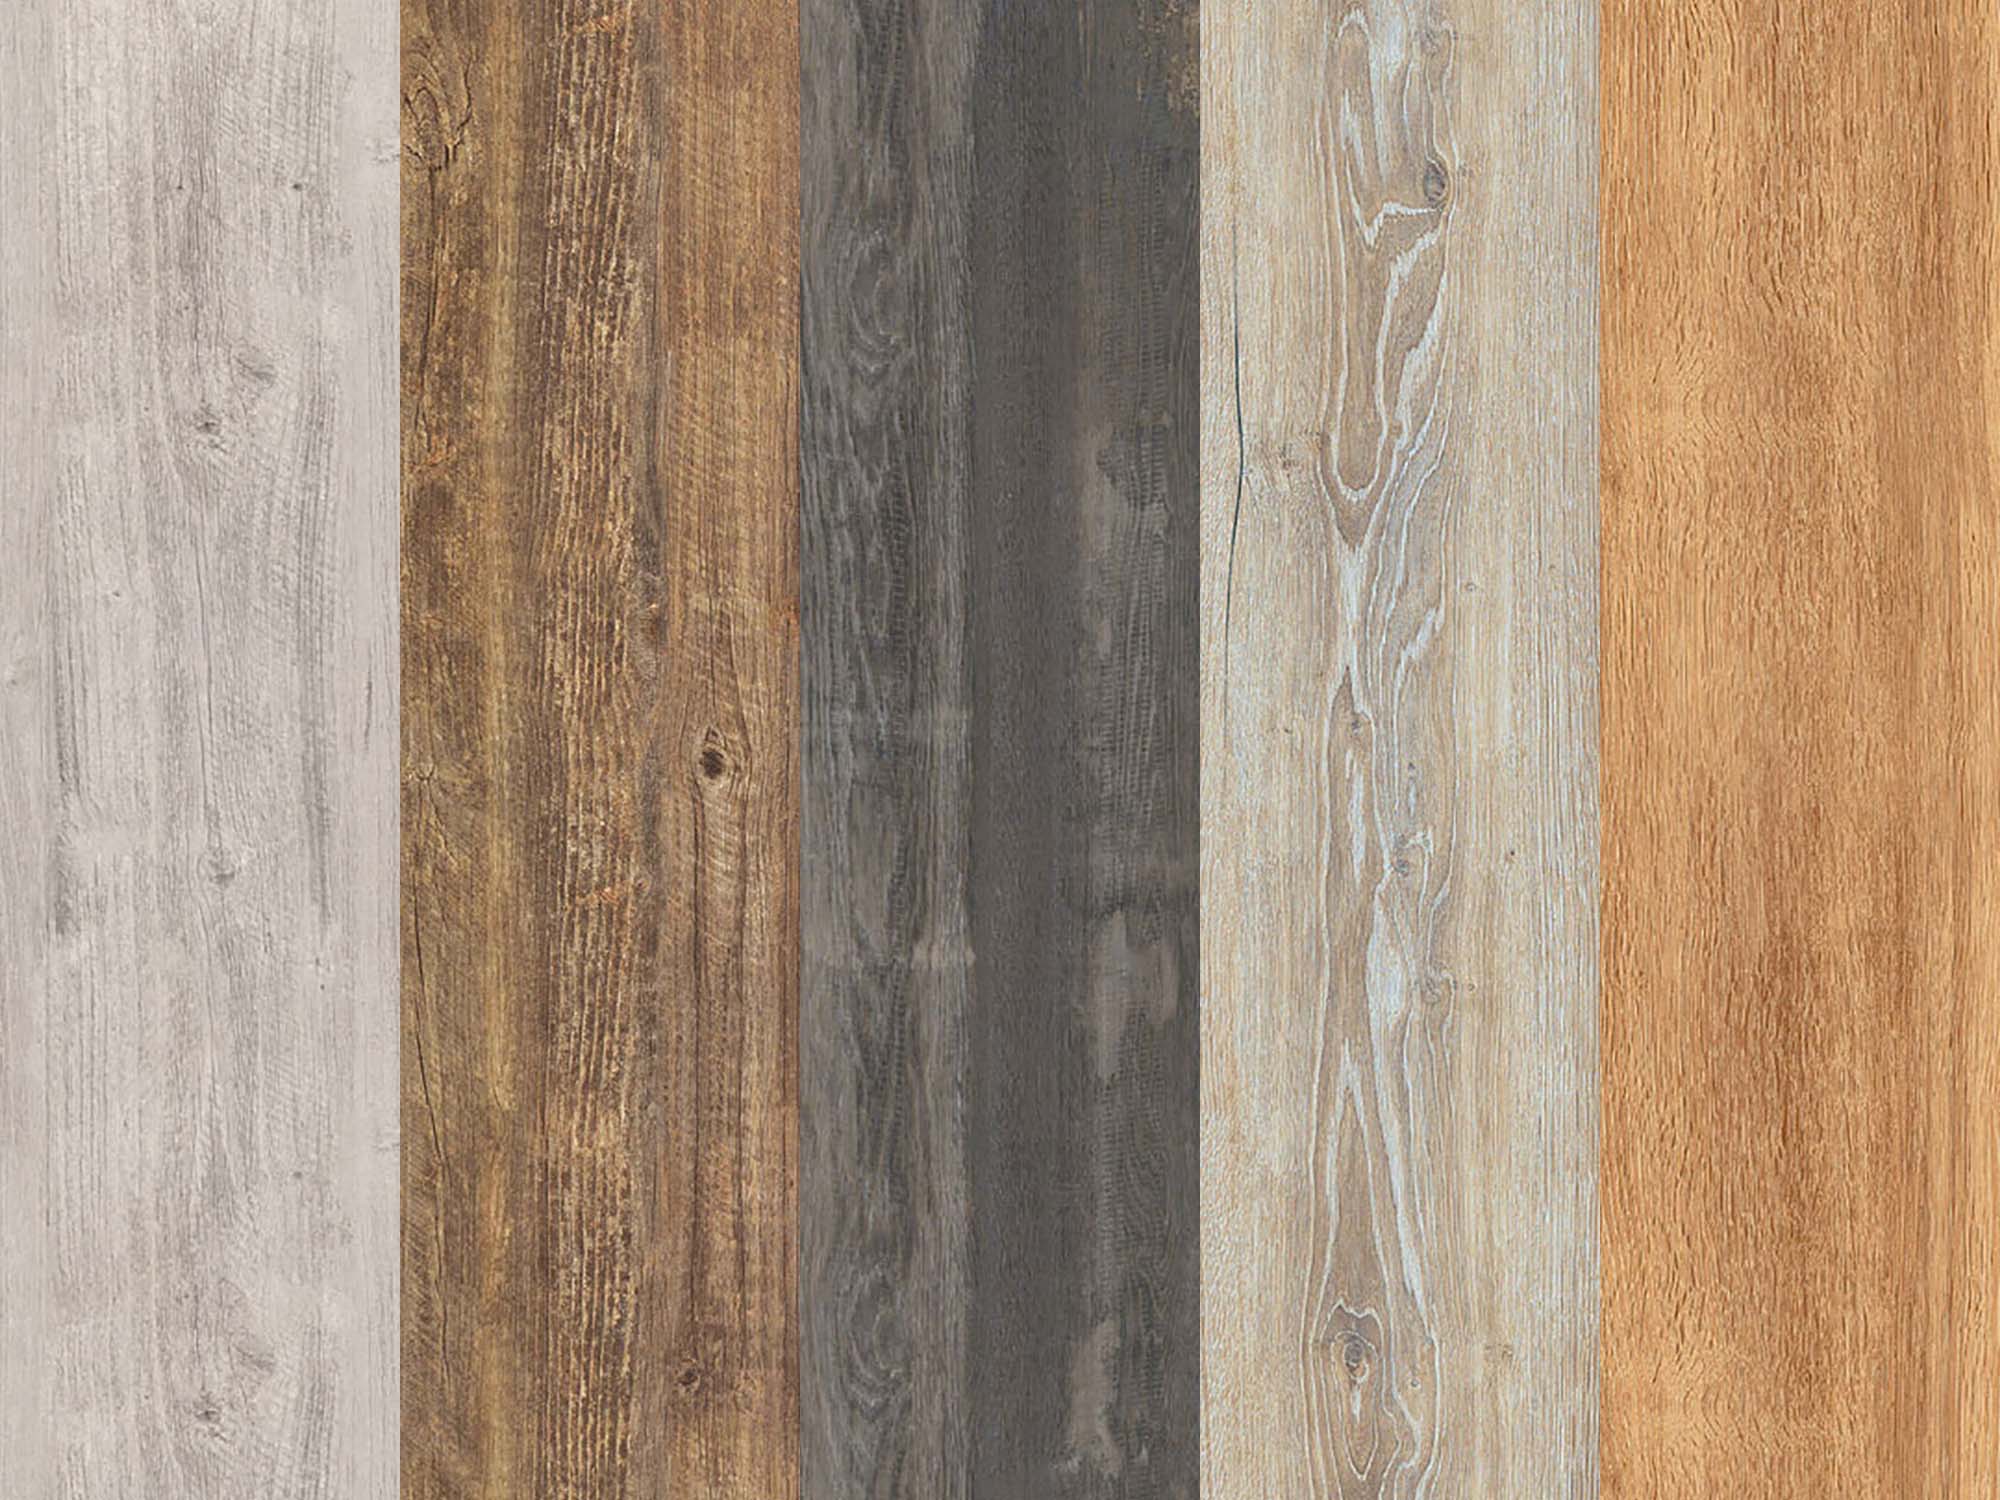 5 Seamless Wood Textures